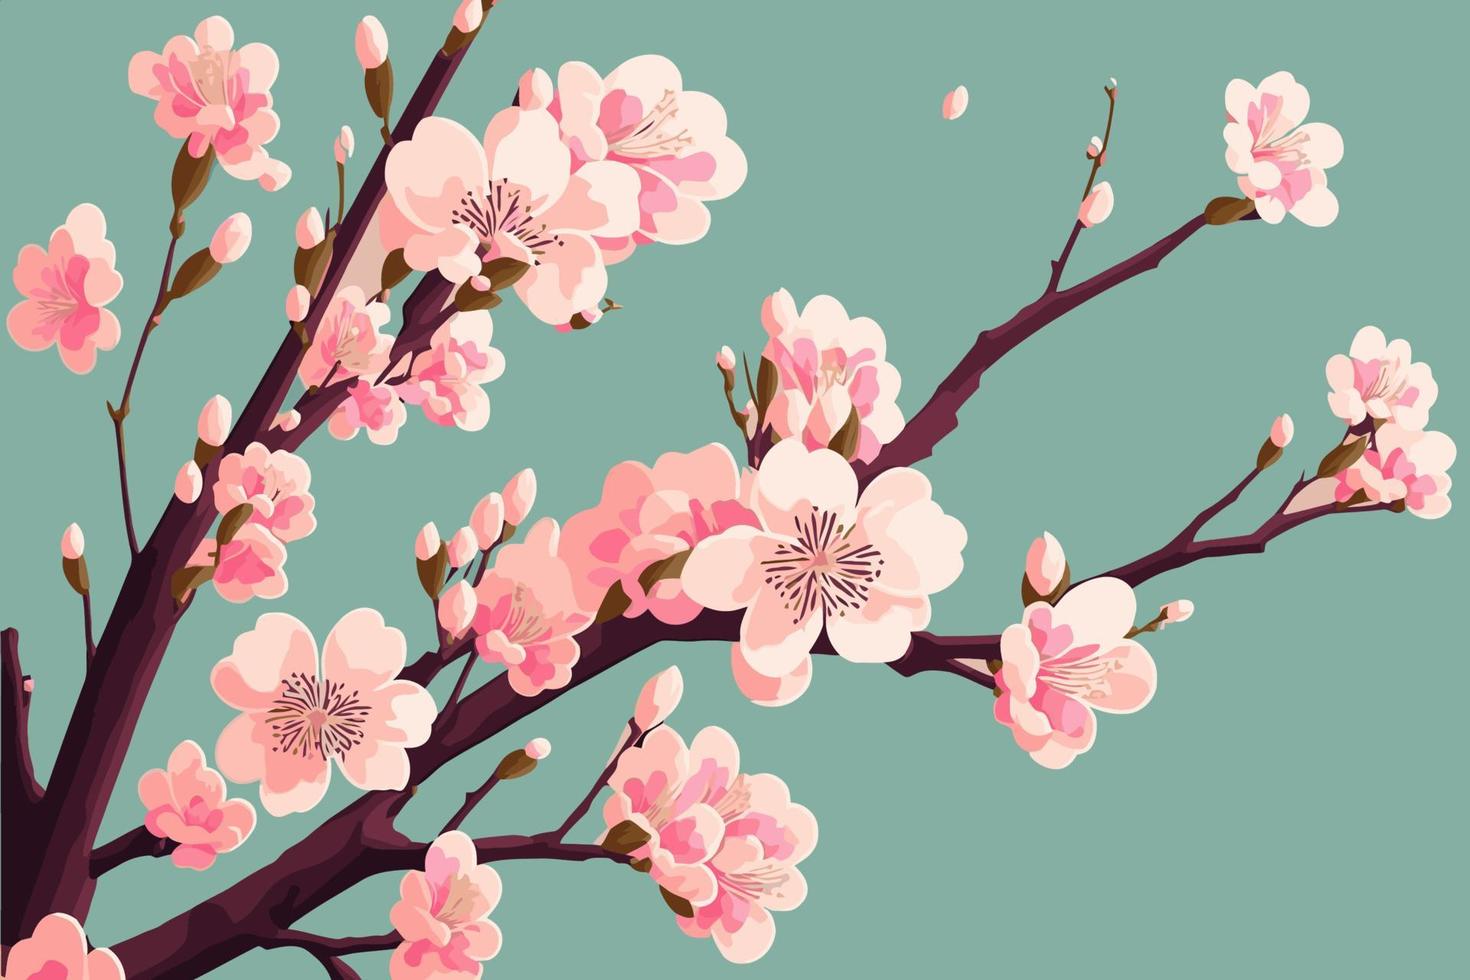 sakura Afdeling kers bloeiende bloem boom, Japan voorjaar bloemen achtergrond vector